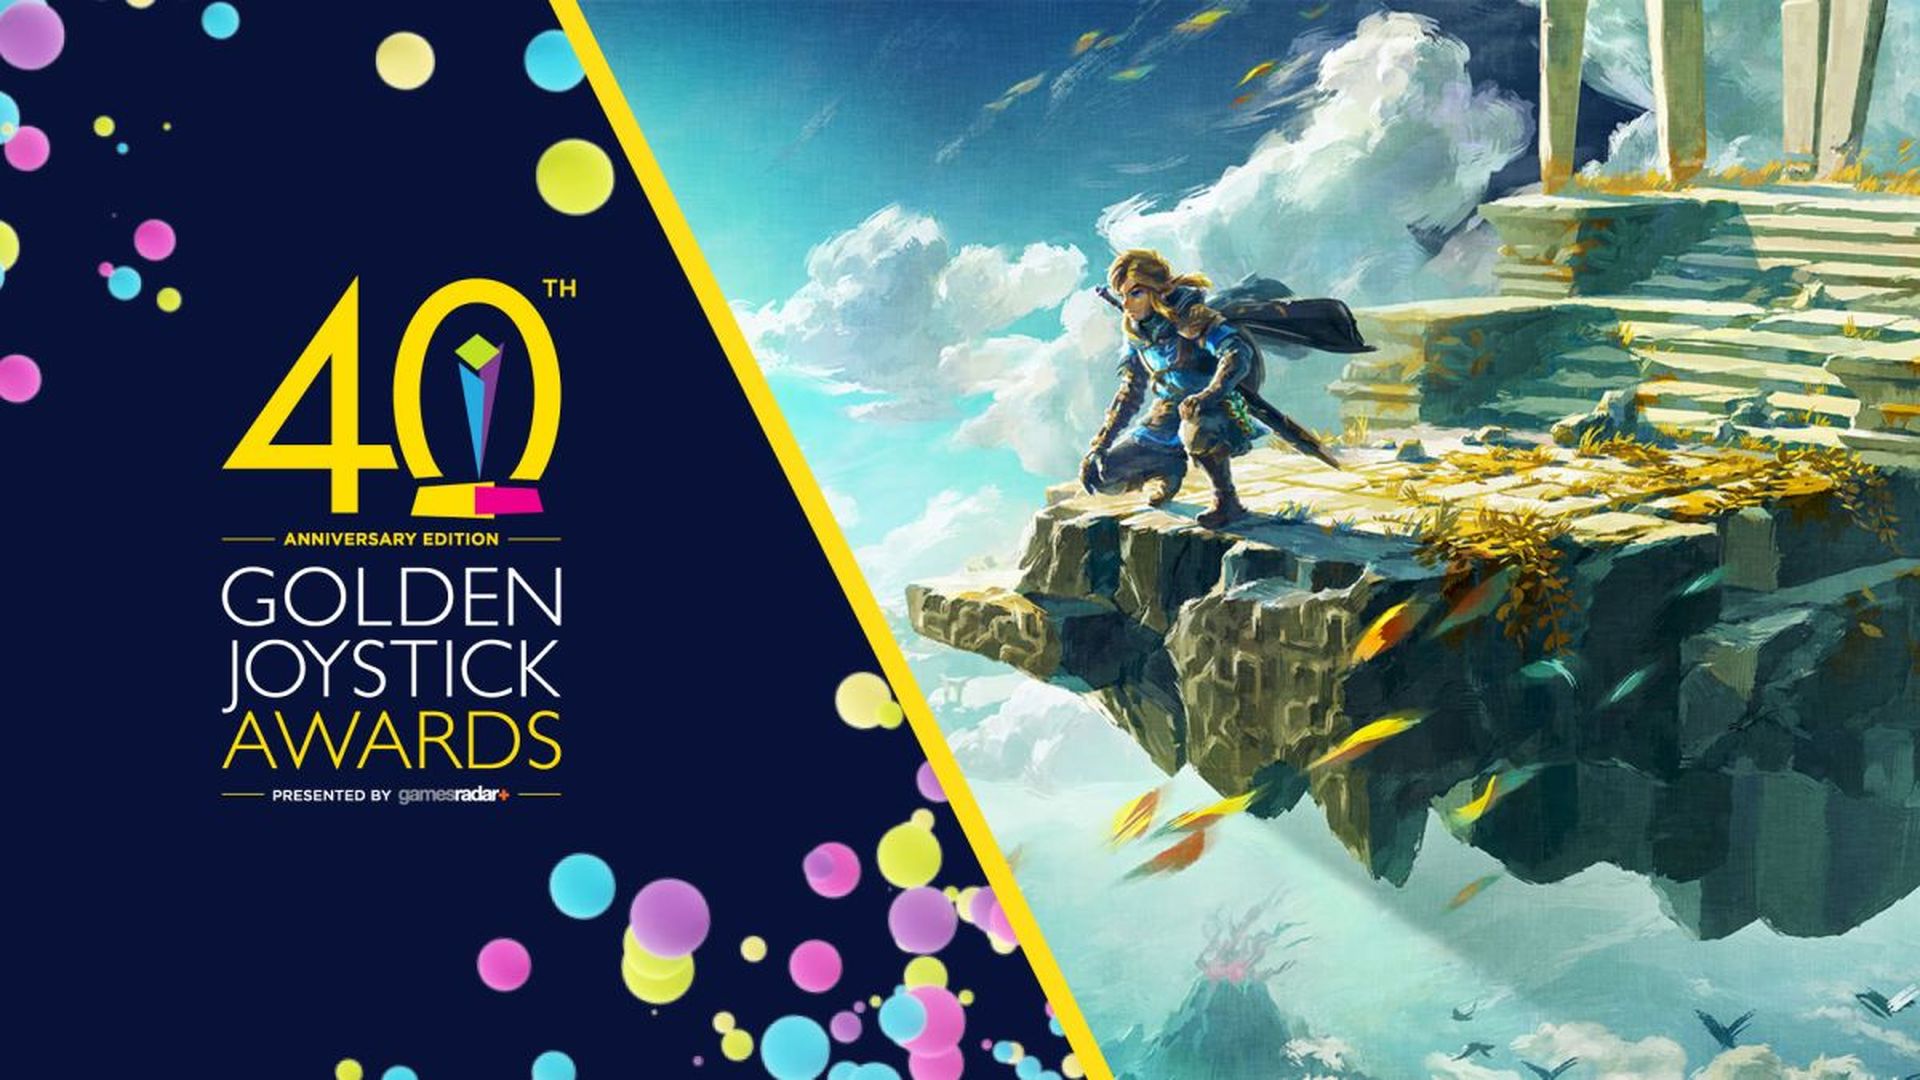 2022 golden joystick awards results: Winner of ''Most Wanted Game'', Legend of Zelda: Tears of the Kingdom